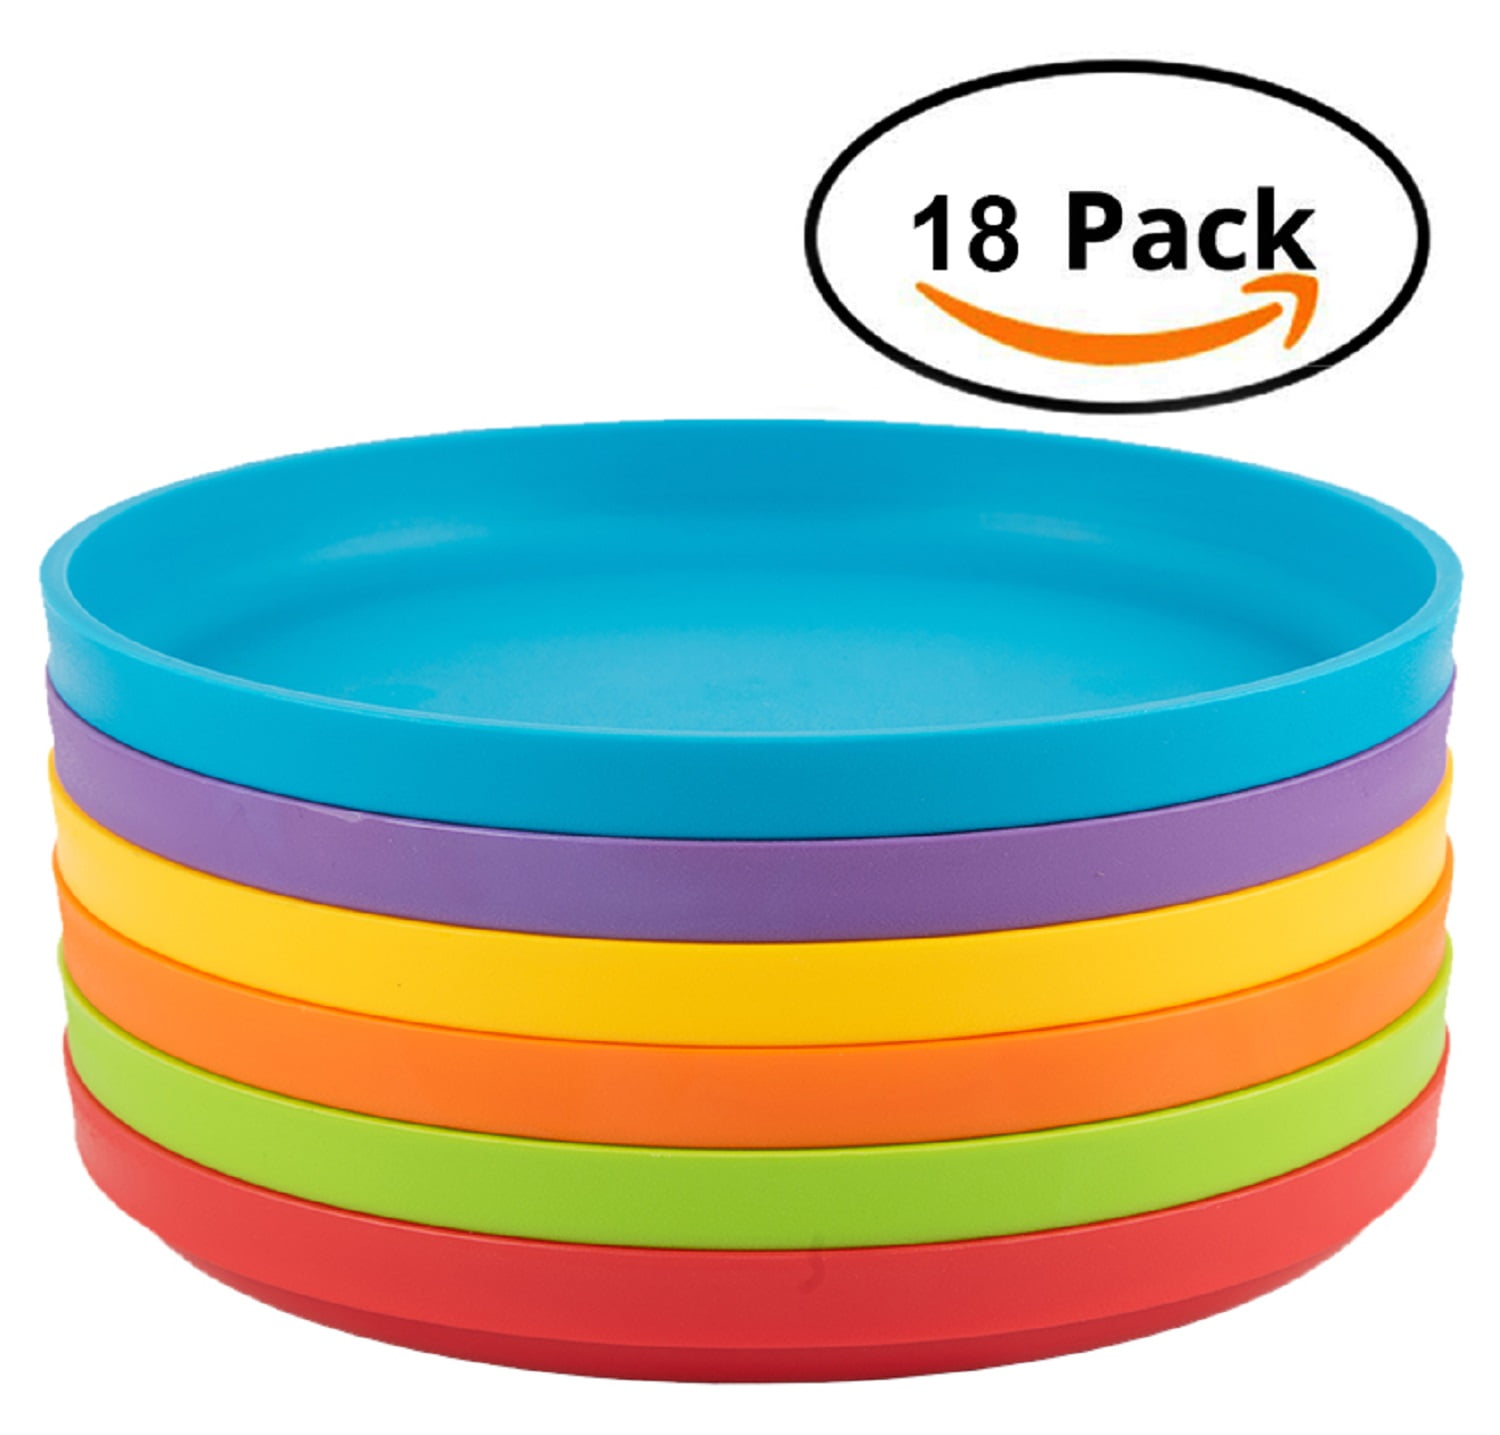 Plastic Plates For Kids 18-Piece|Round Plates Multicolor|Microwave Safe